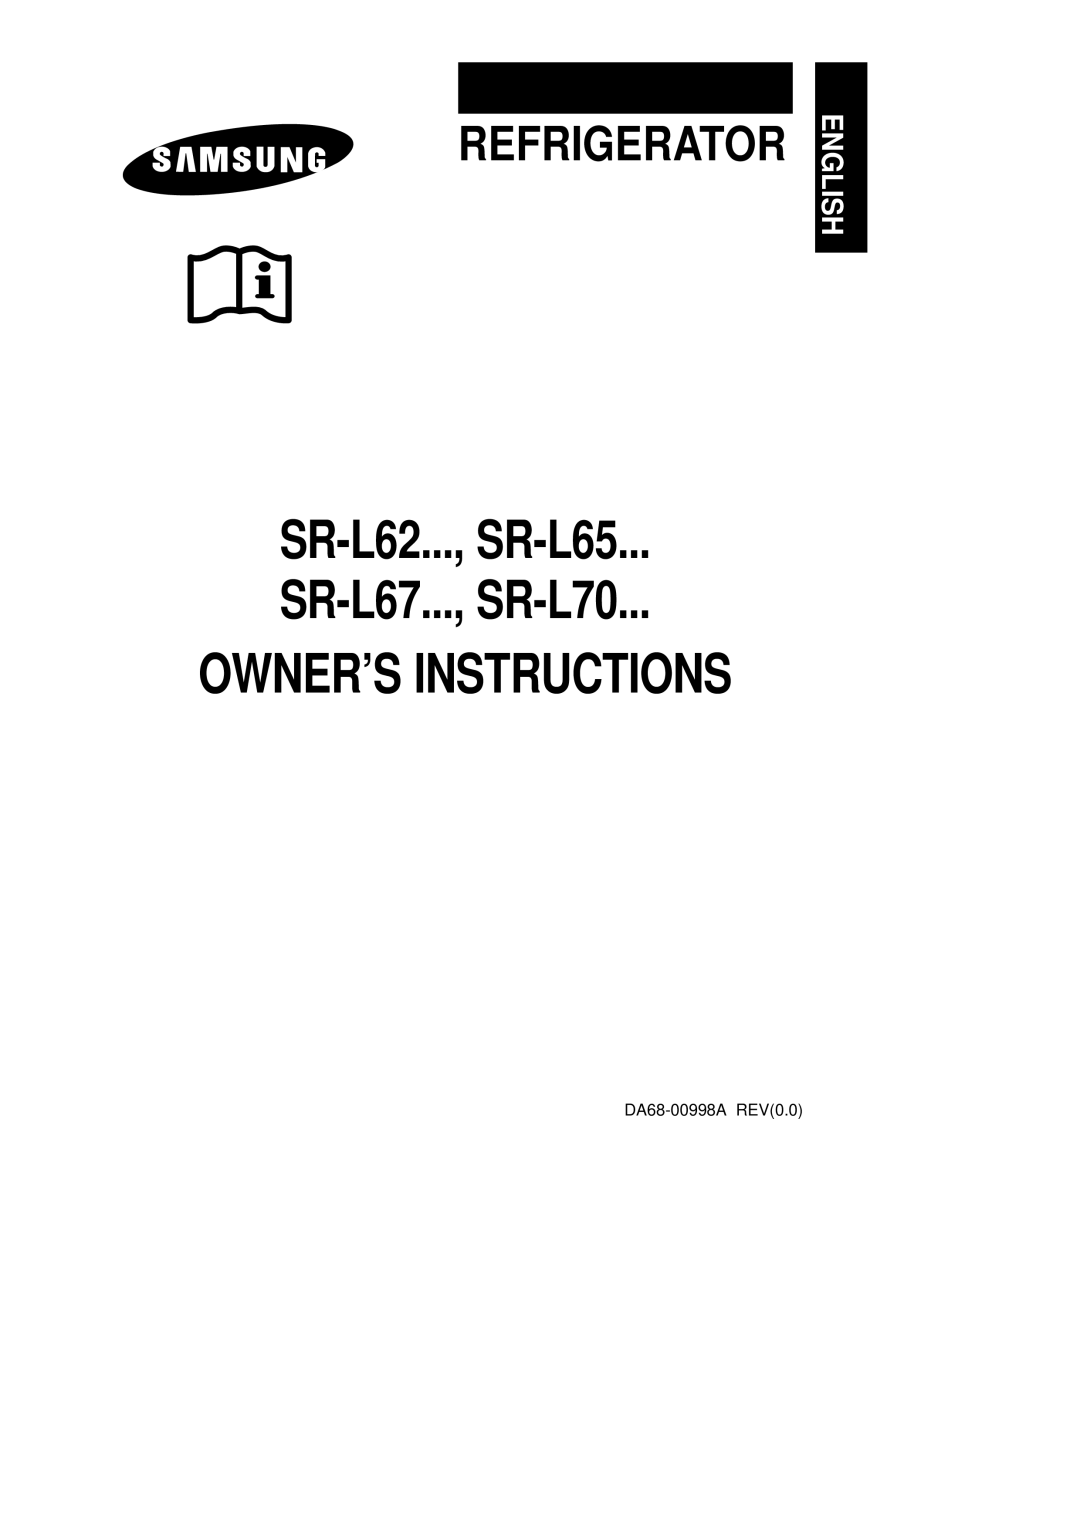 Samsung manual English, SR-L62..., SR-L65 SR-L67..., SR-L70, Owner’S Instructions, Refrigerator 